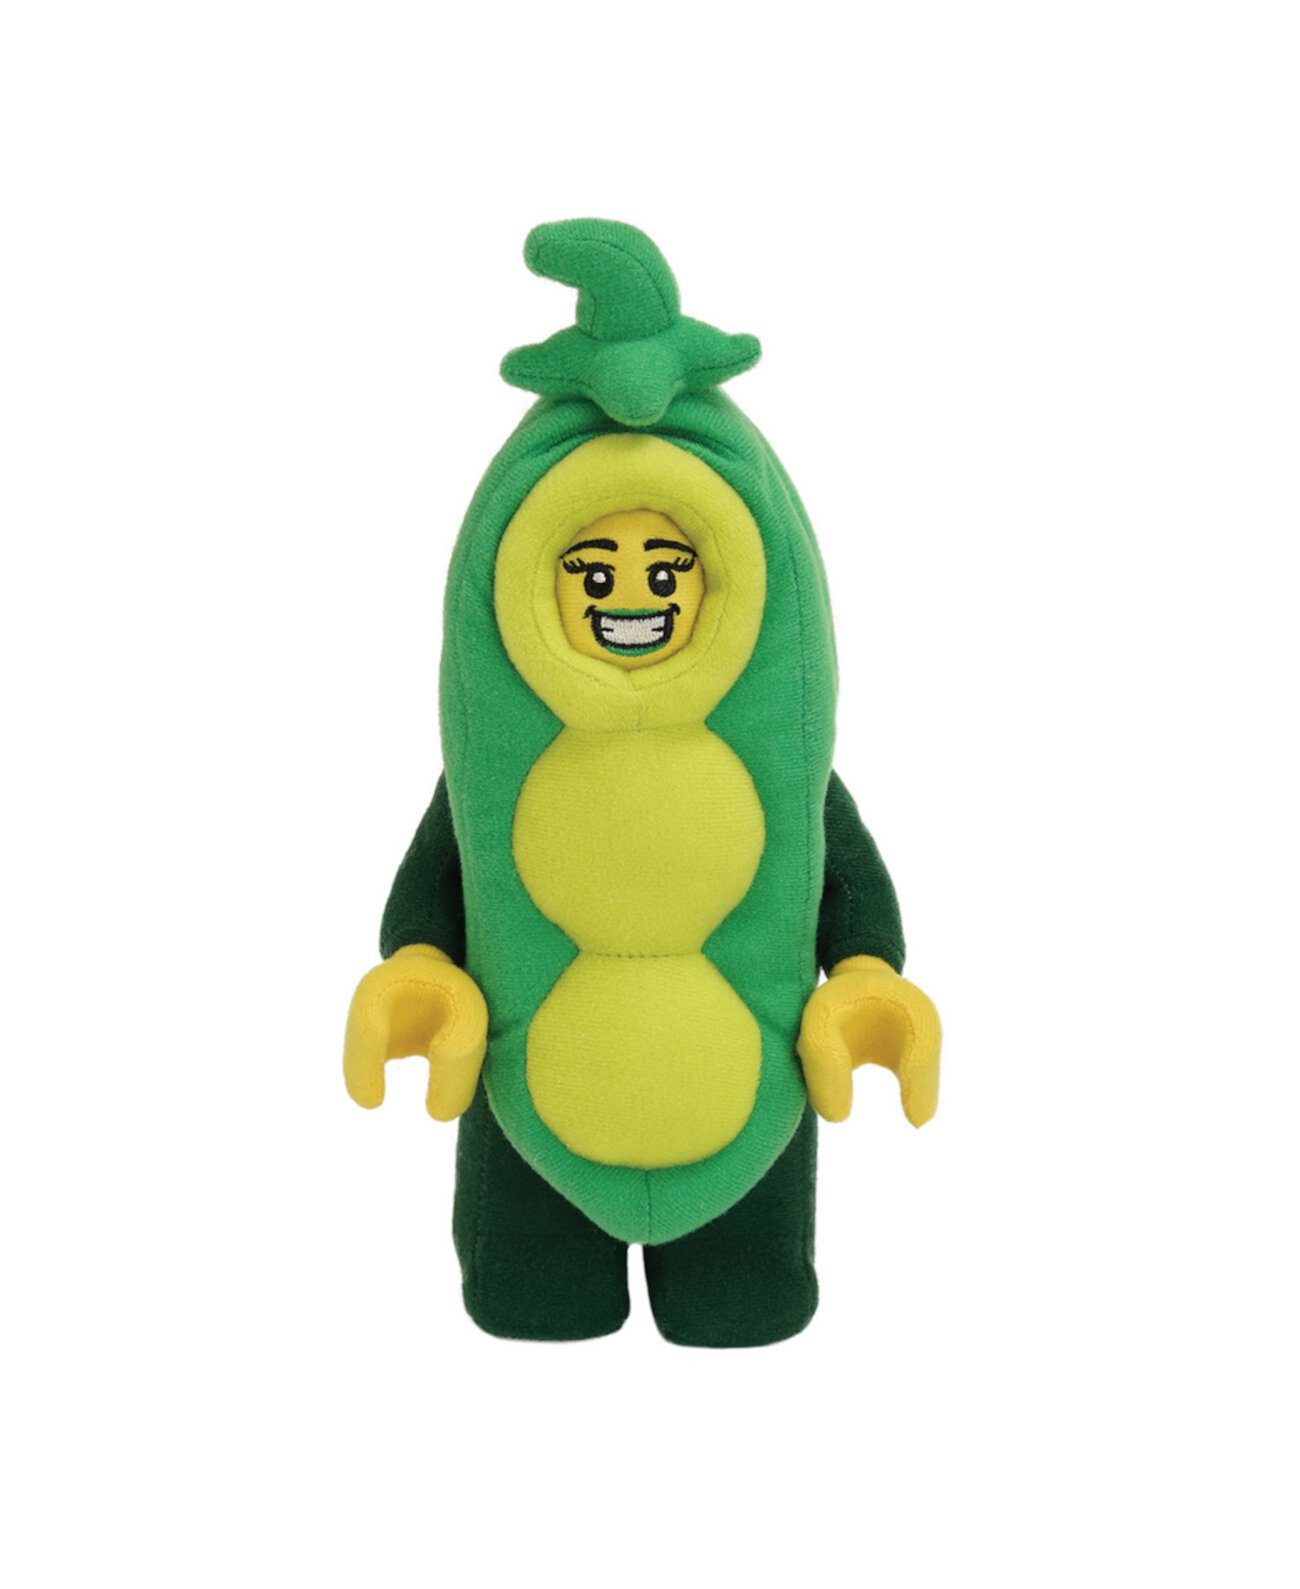 LEGO Minifigure Peapod Costume Girl 9-дюймовый плюшевый персонаж Manhattan Toy